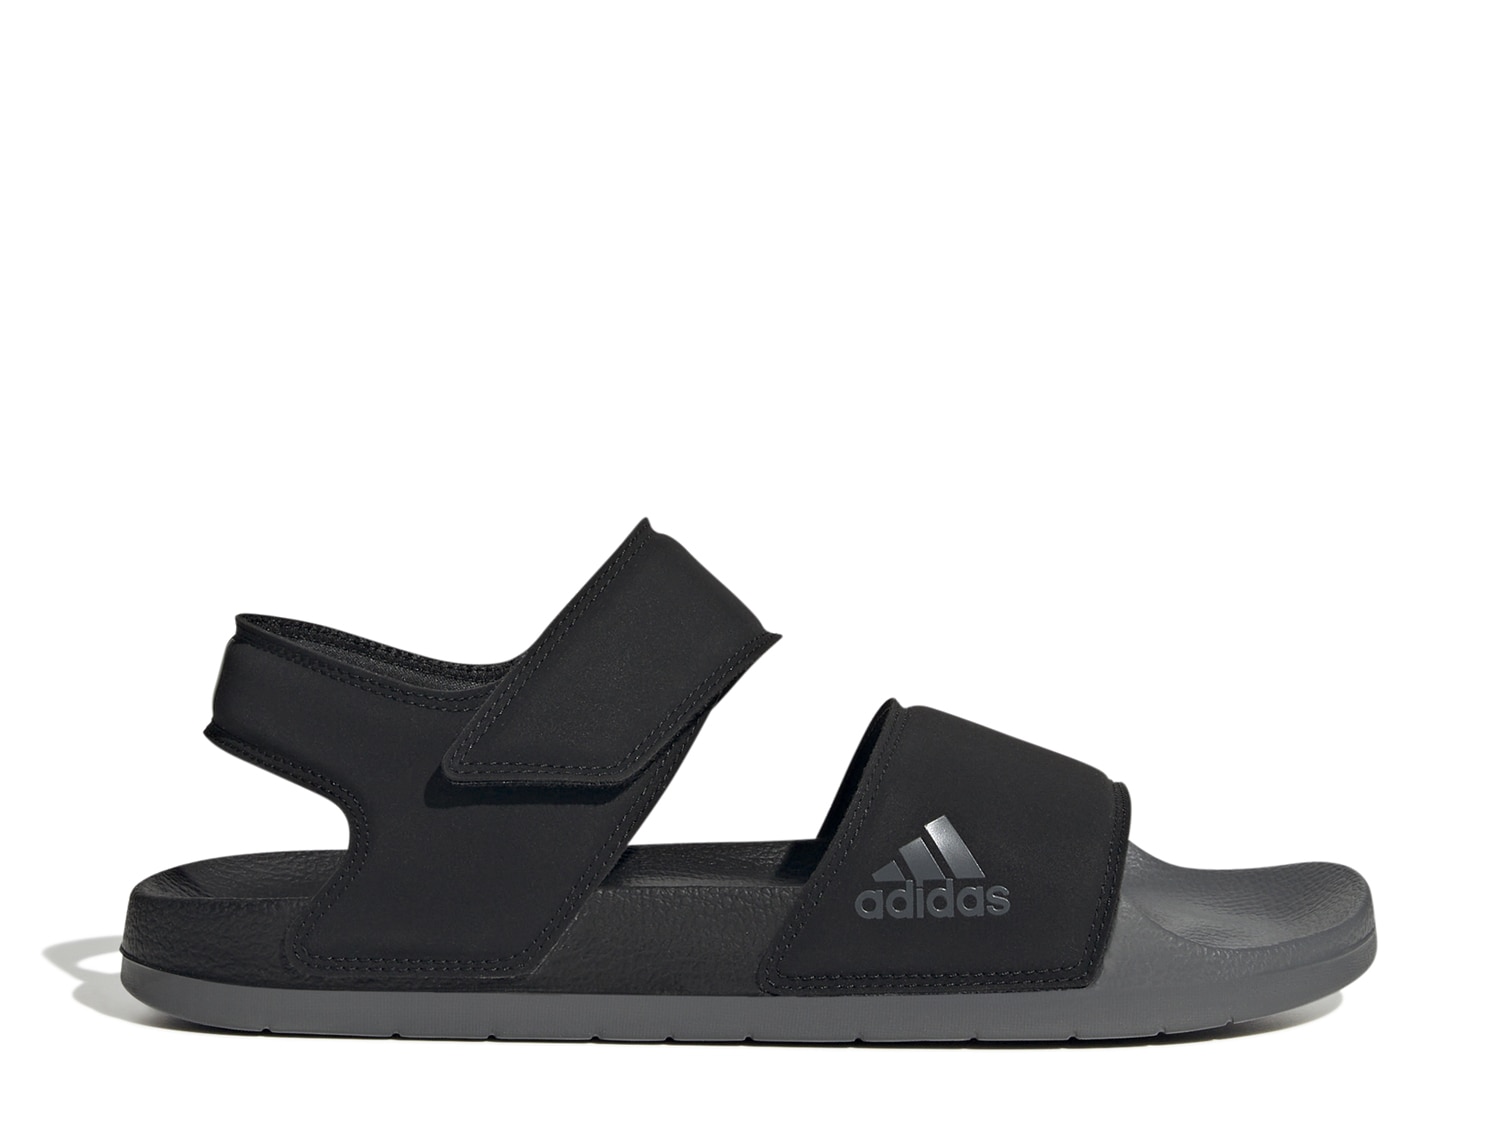 Adidas Men's Adilette Comfort Adjustable Slide Sandals - Black, 8